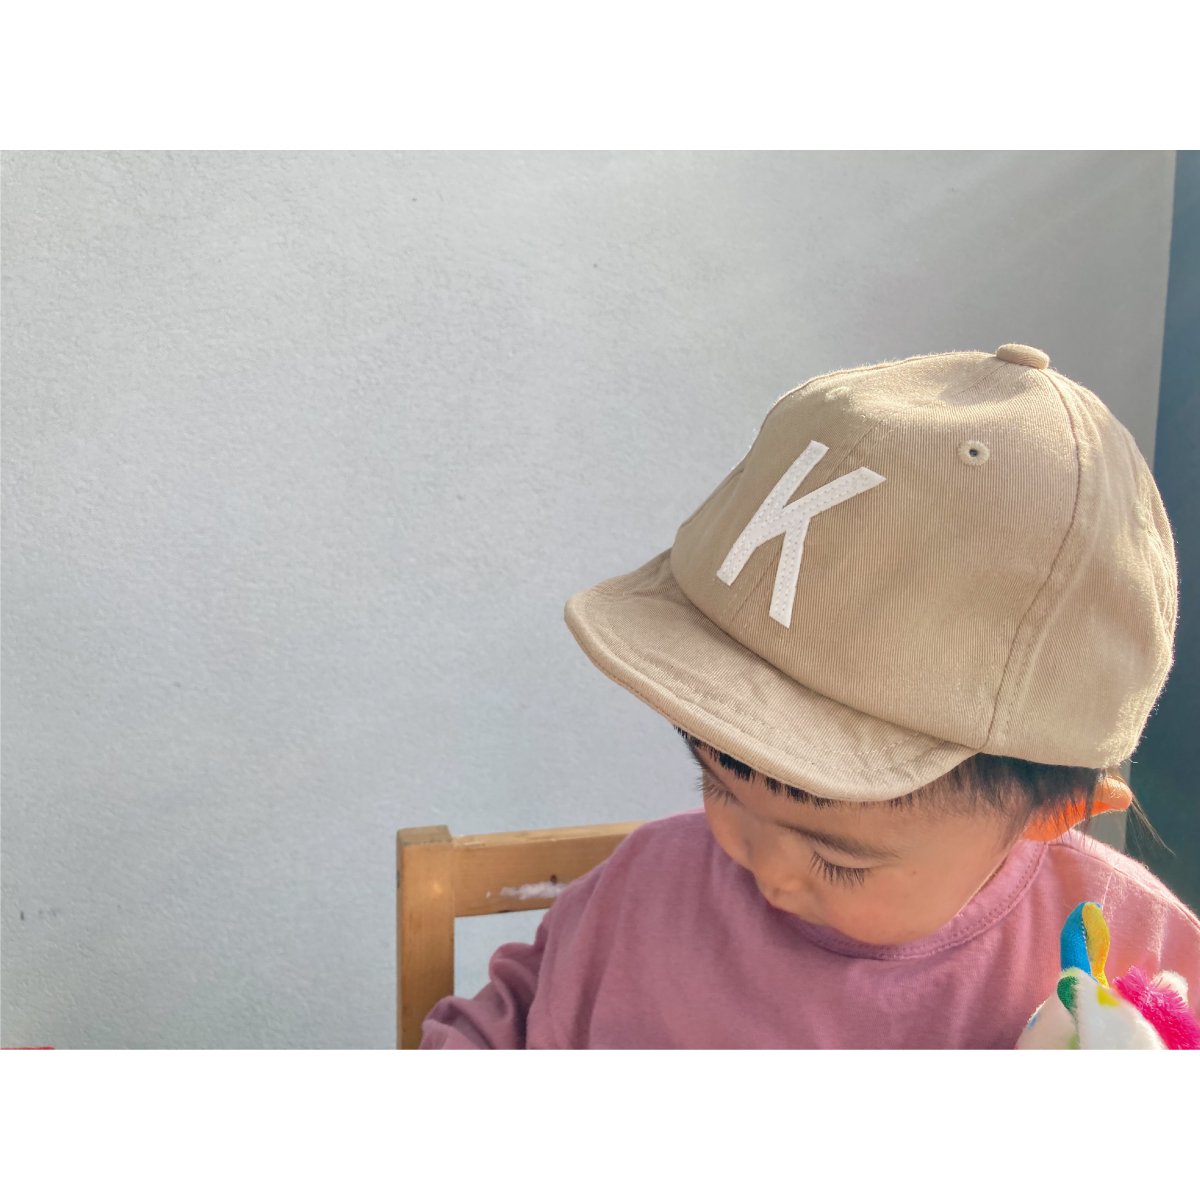 【KIDS】Kids Sim Logo Cap